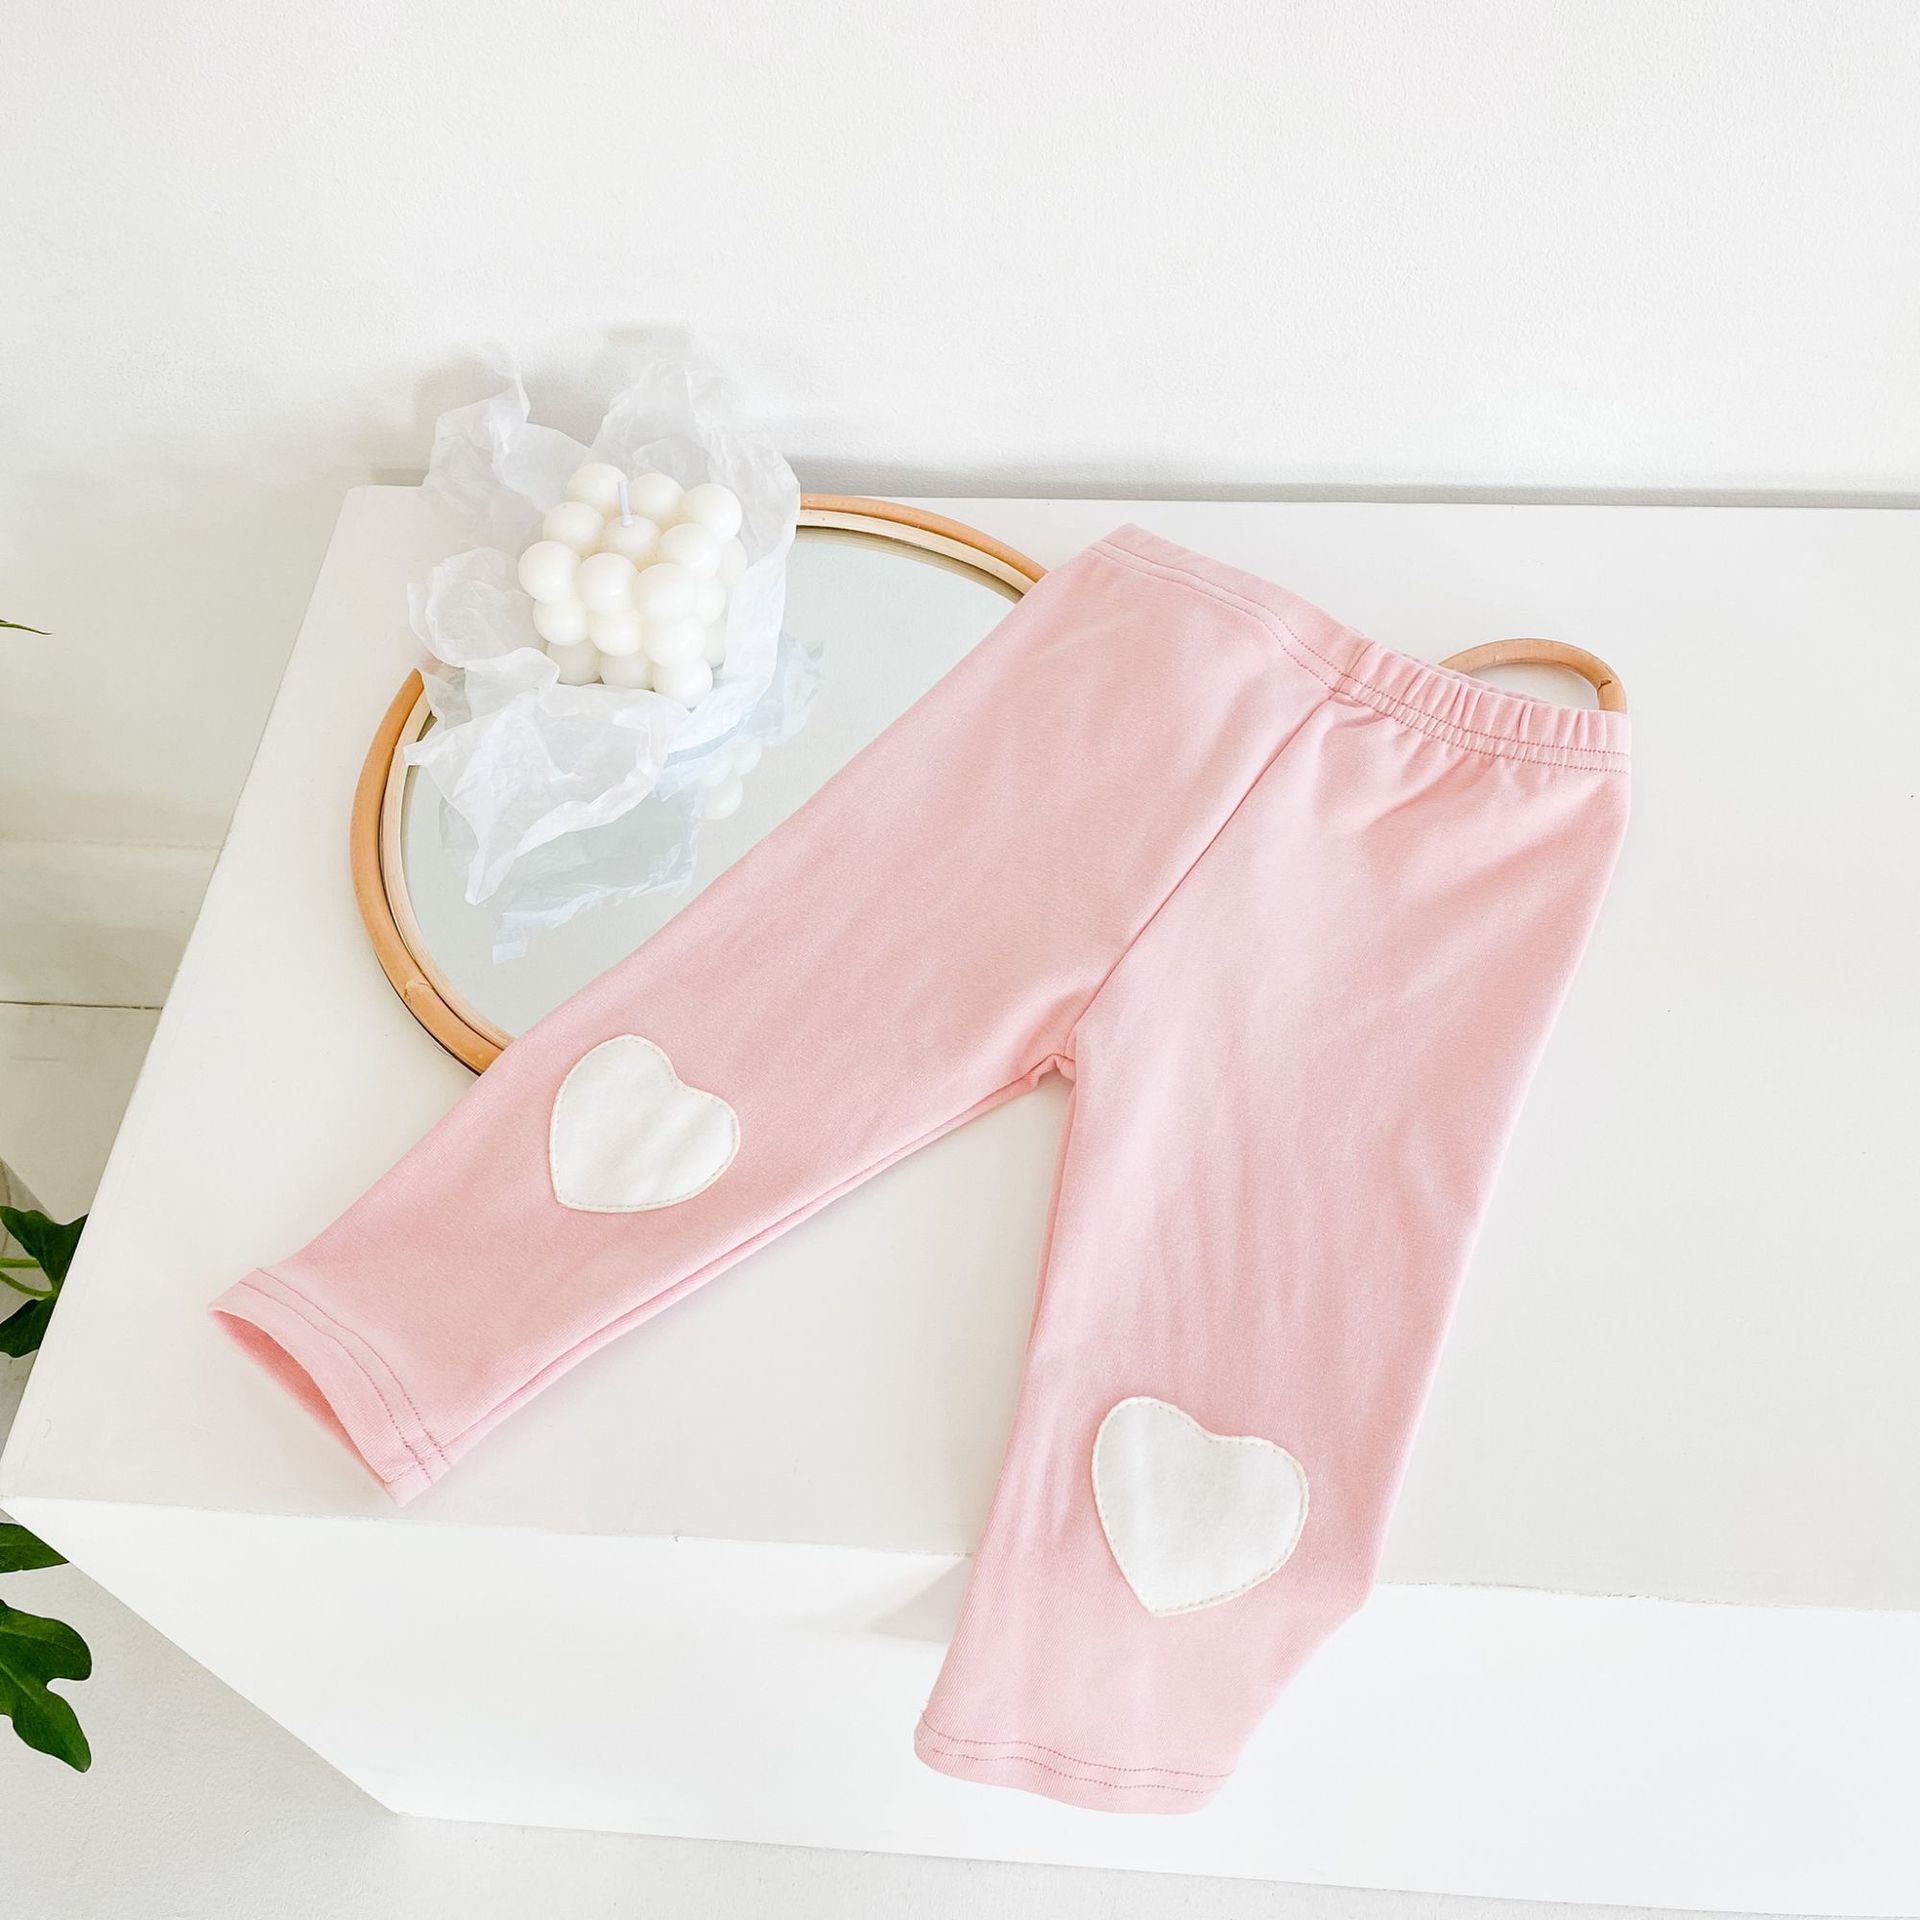 Ghette neonati: Tipi di pantaloni